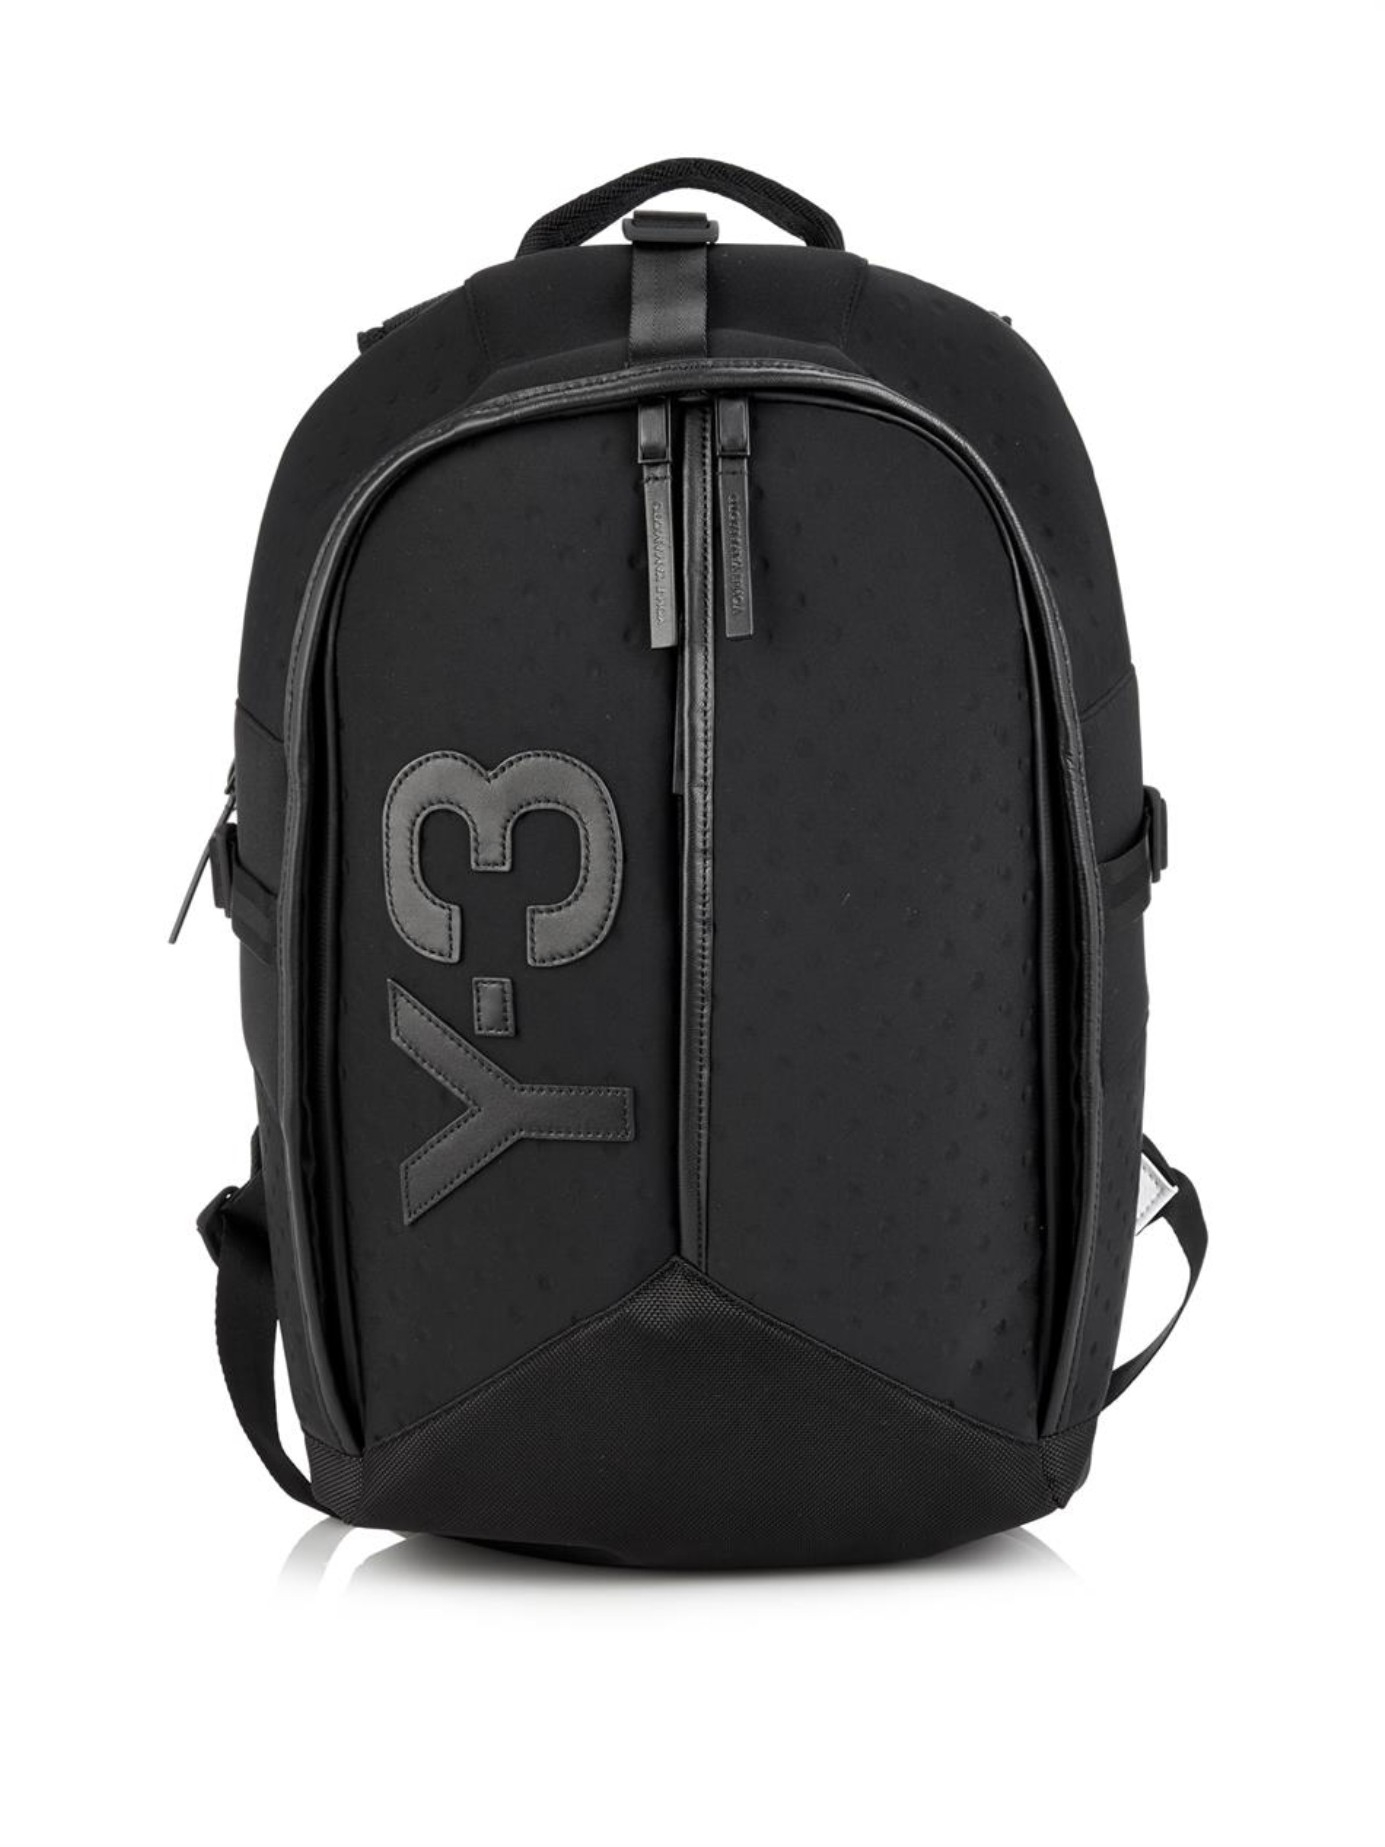 Y-3 Textured Neoprene Backpack in Black for Men | Lyst